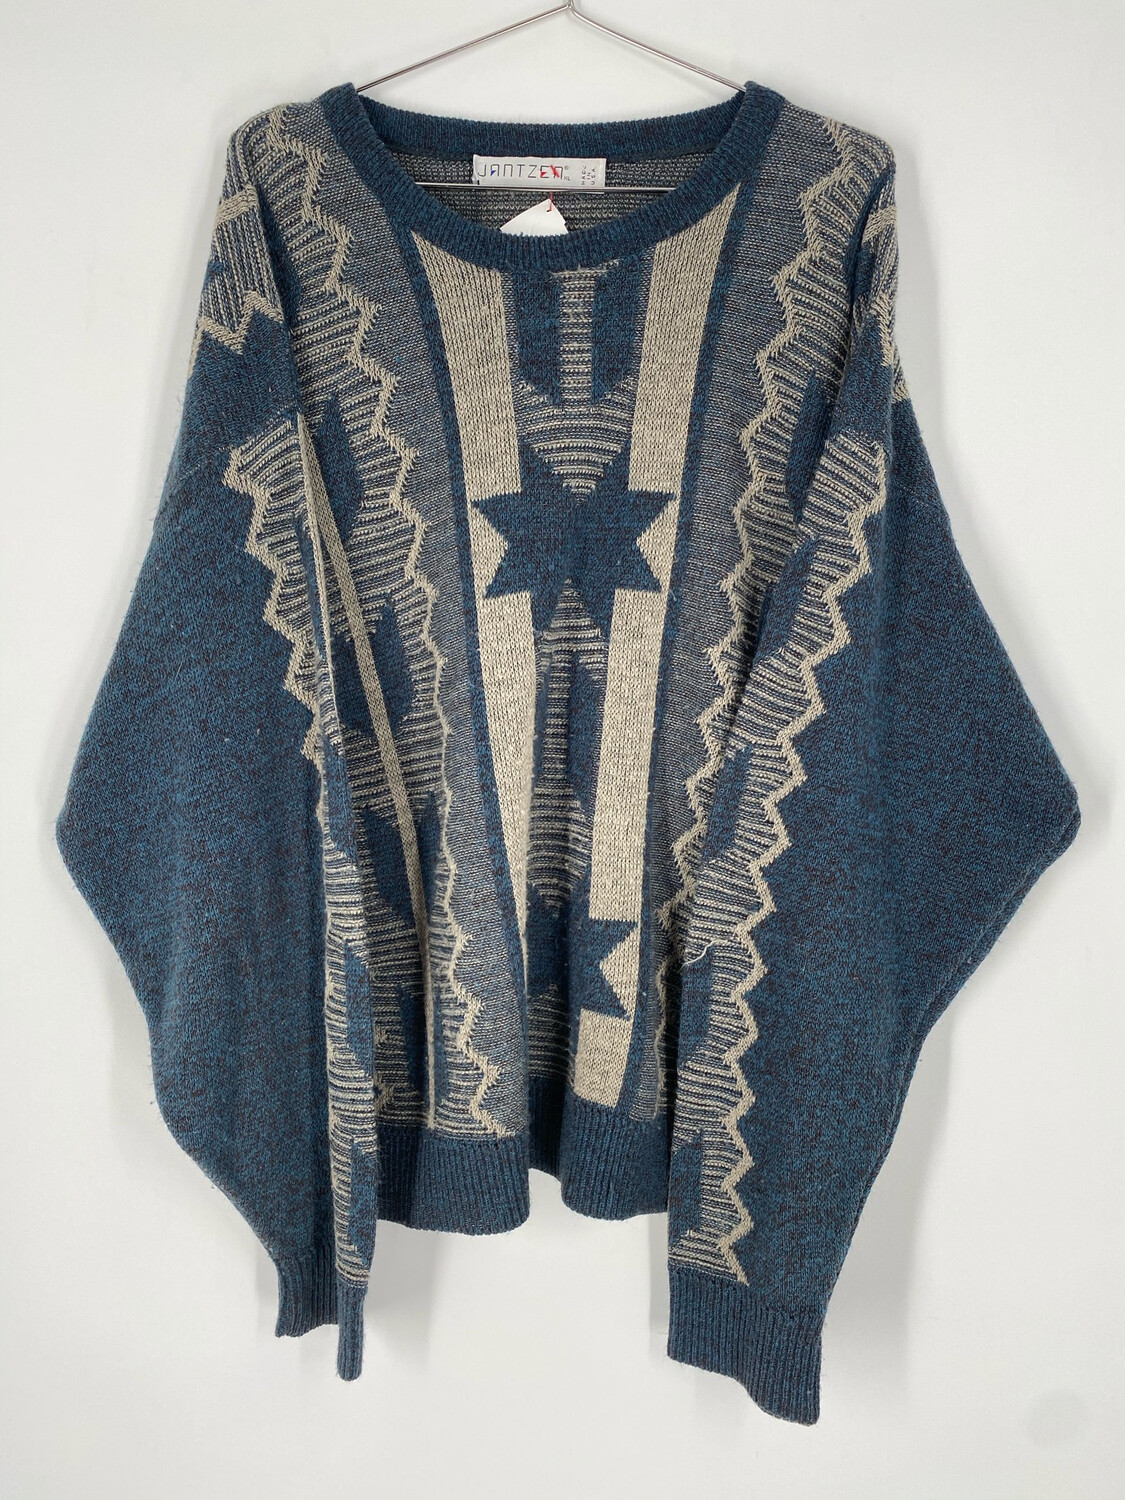 Jantzen Vintage Printed Sweater Size XL